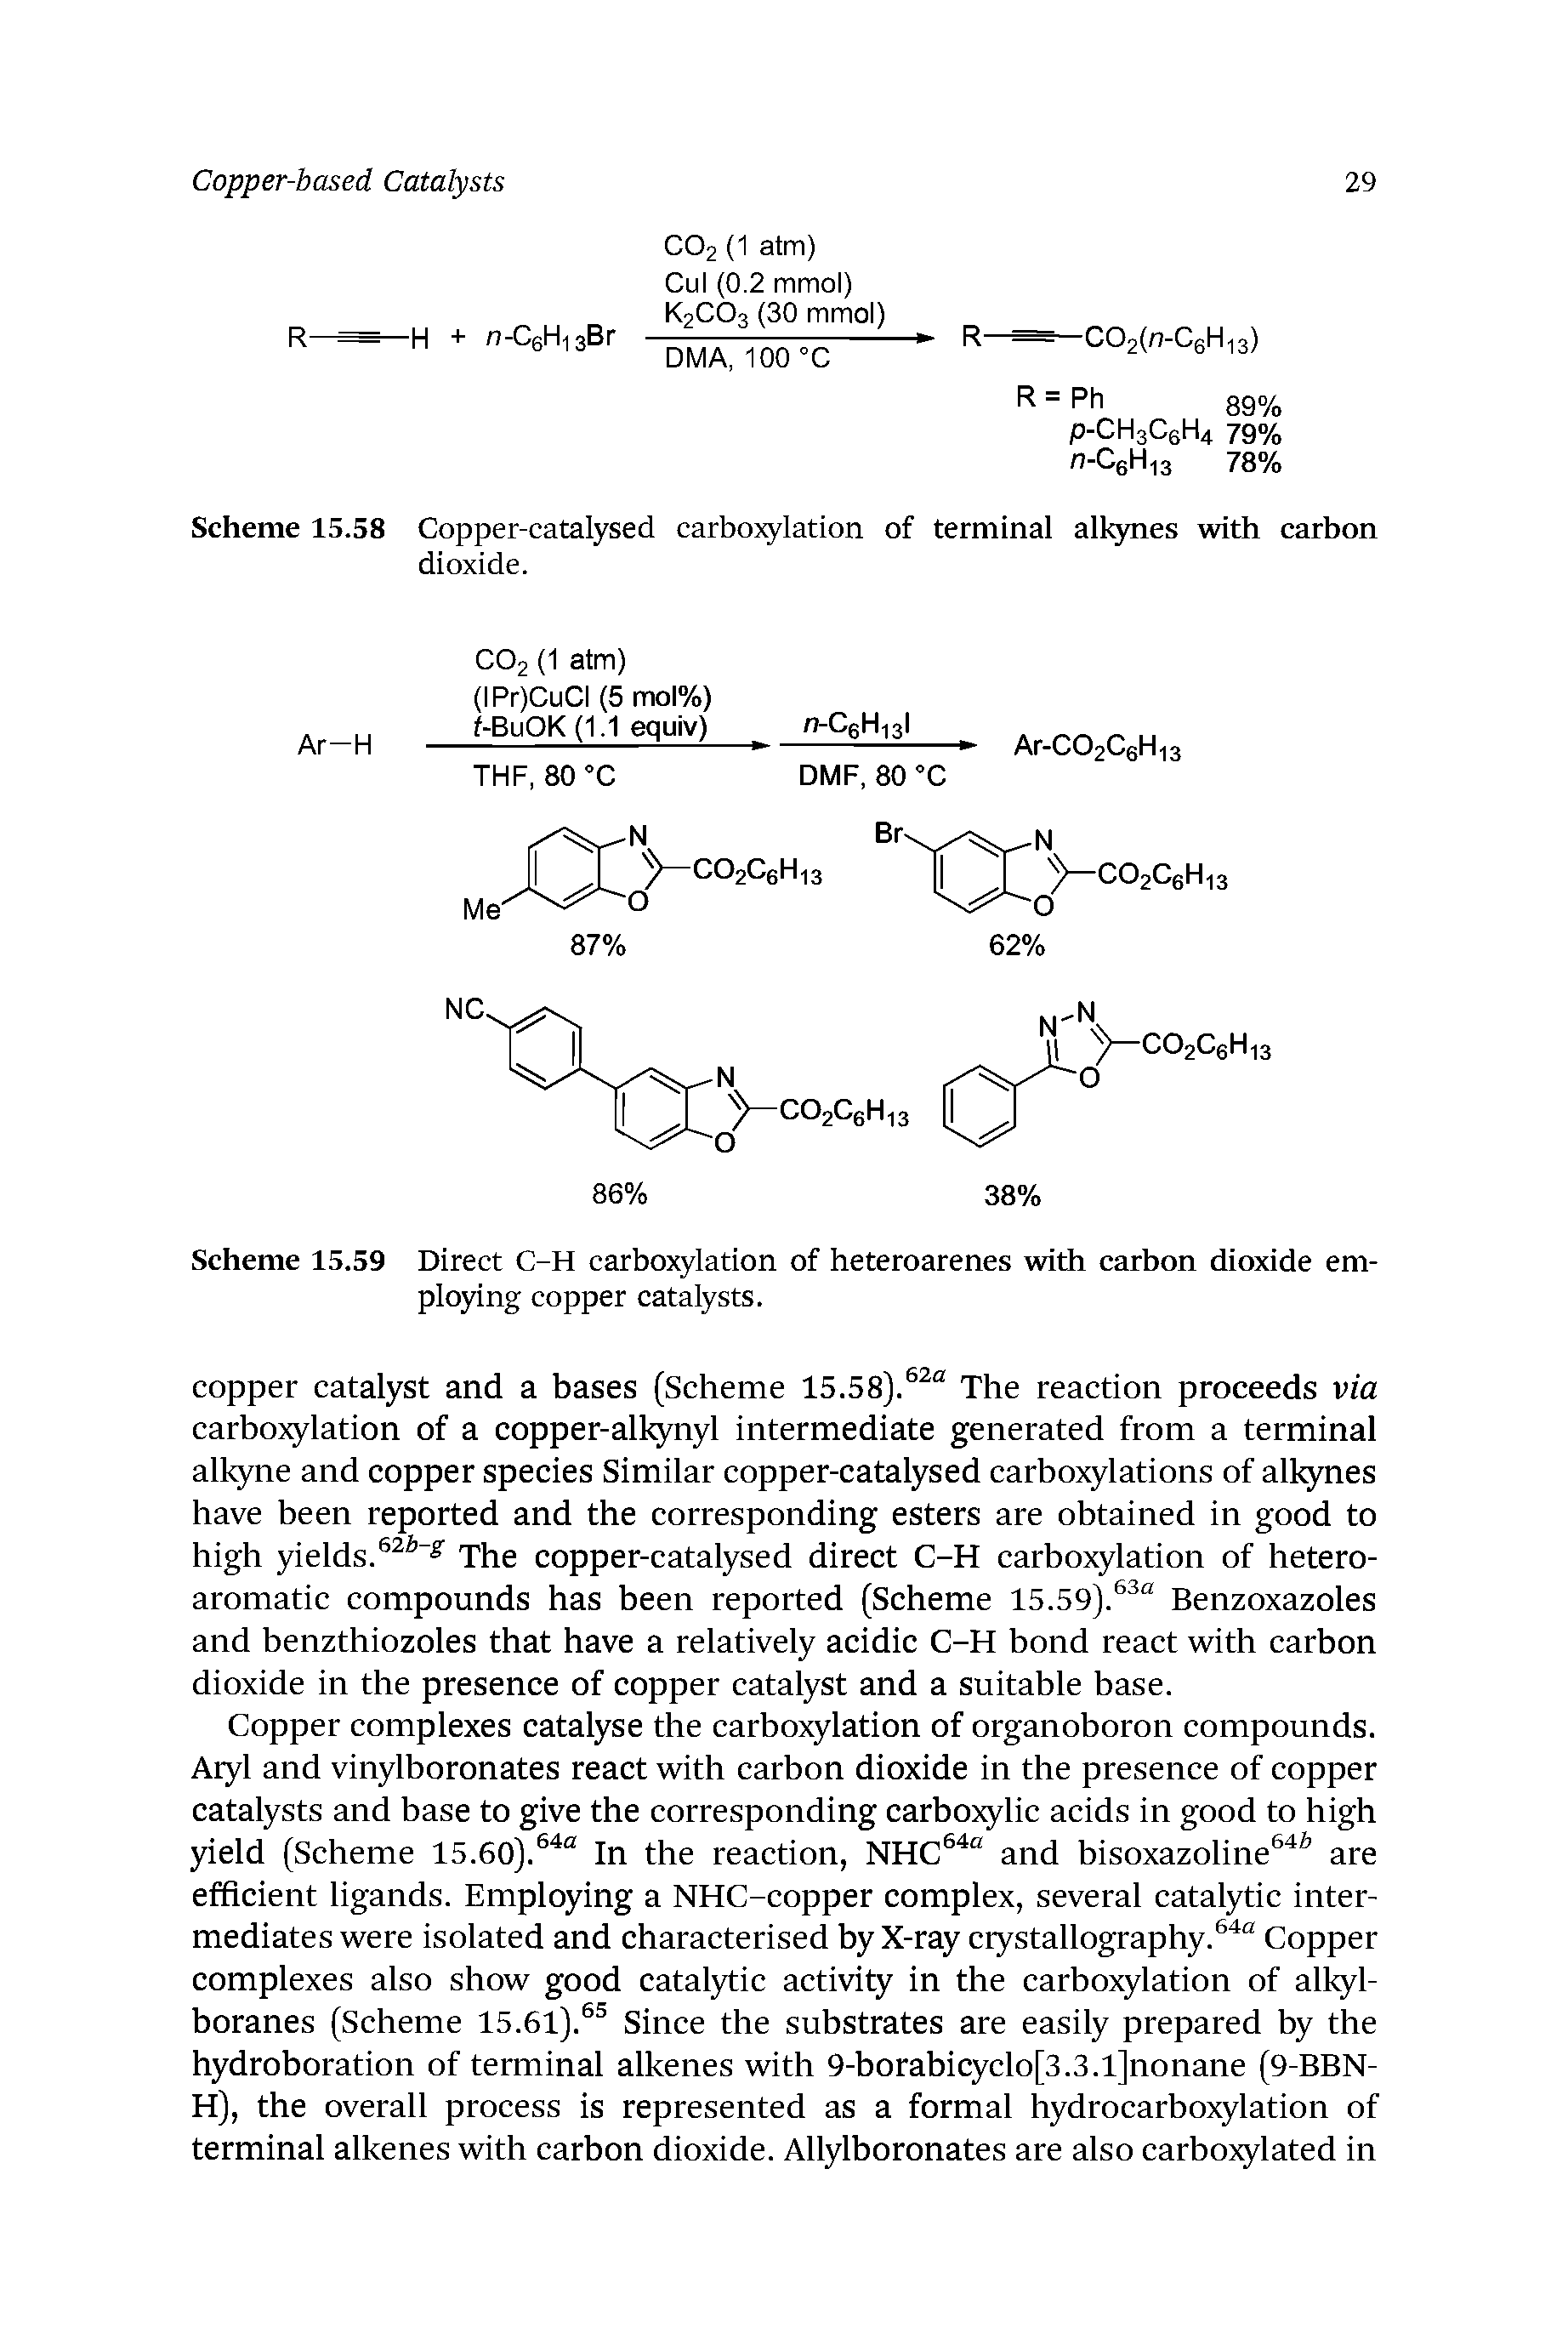 Scheme 15.59 Direct C-H carbojq lation of heteroarenes with carhon dioxide employing copper catalysts.